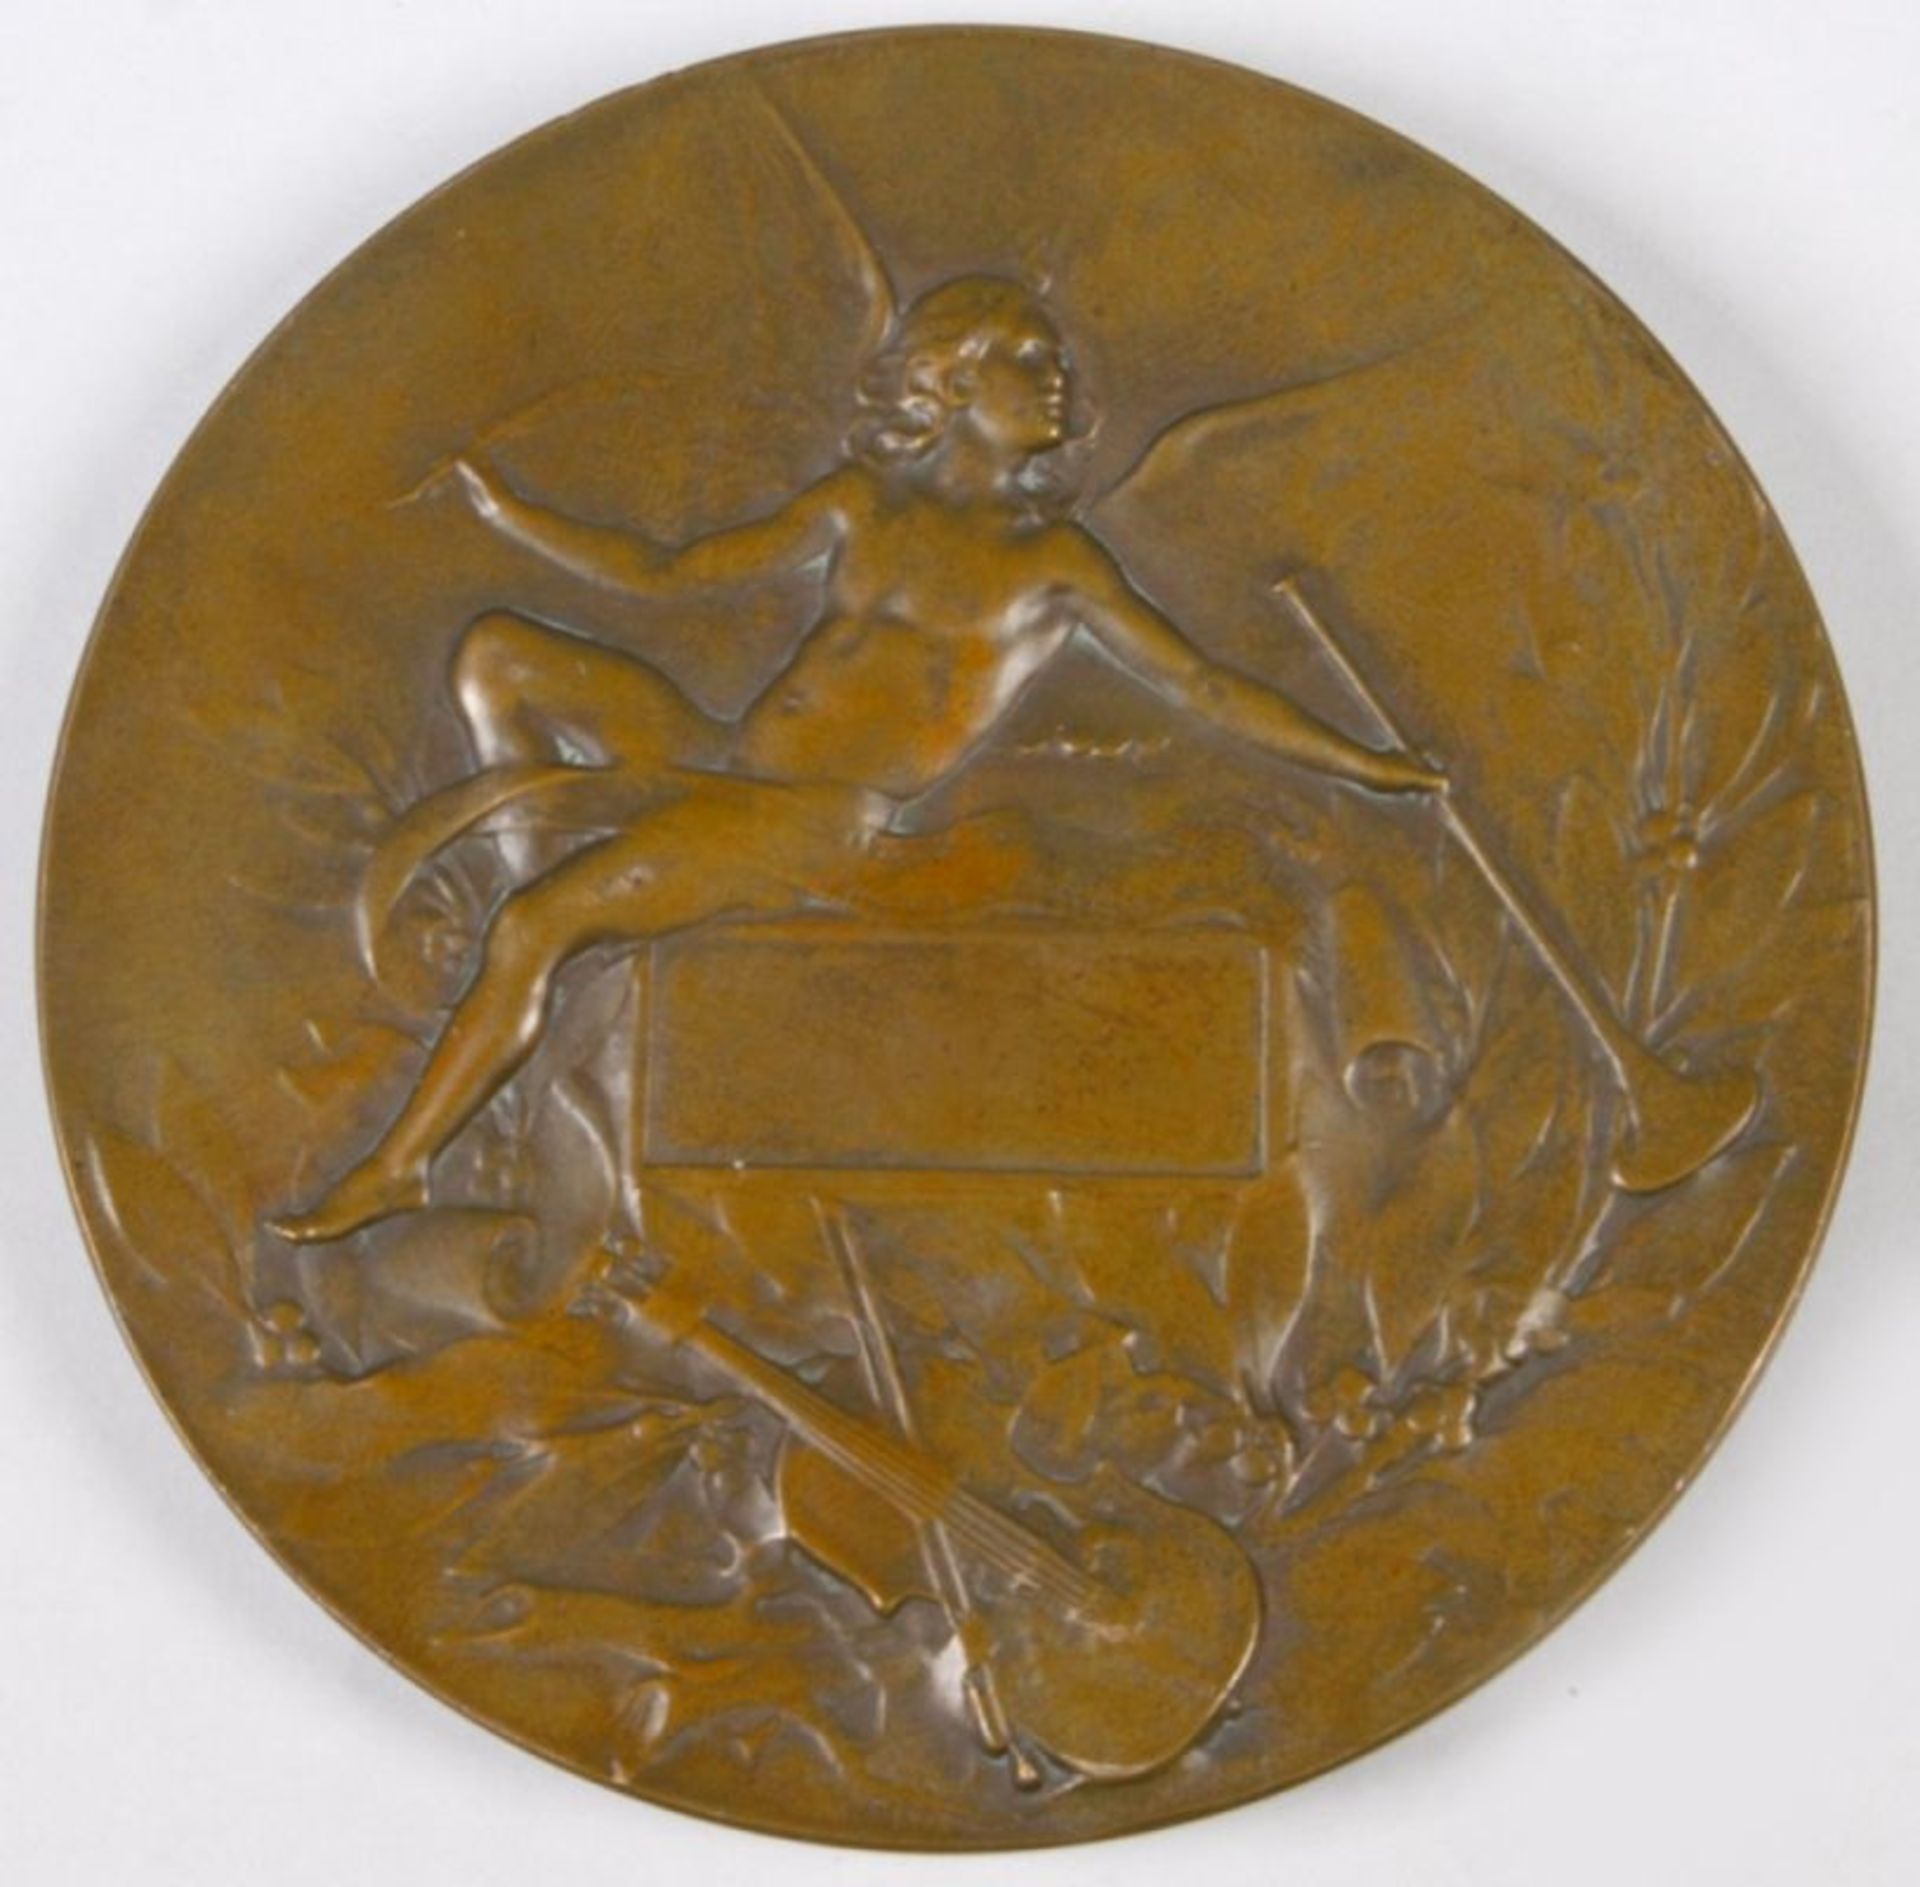 Bronze-Medaille, "Buste d'Orphée", Coudray, Marie Alexandra Lucien, Paris 1864 - 1932,runde, - Bild 2 aus 4